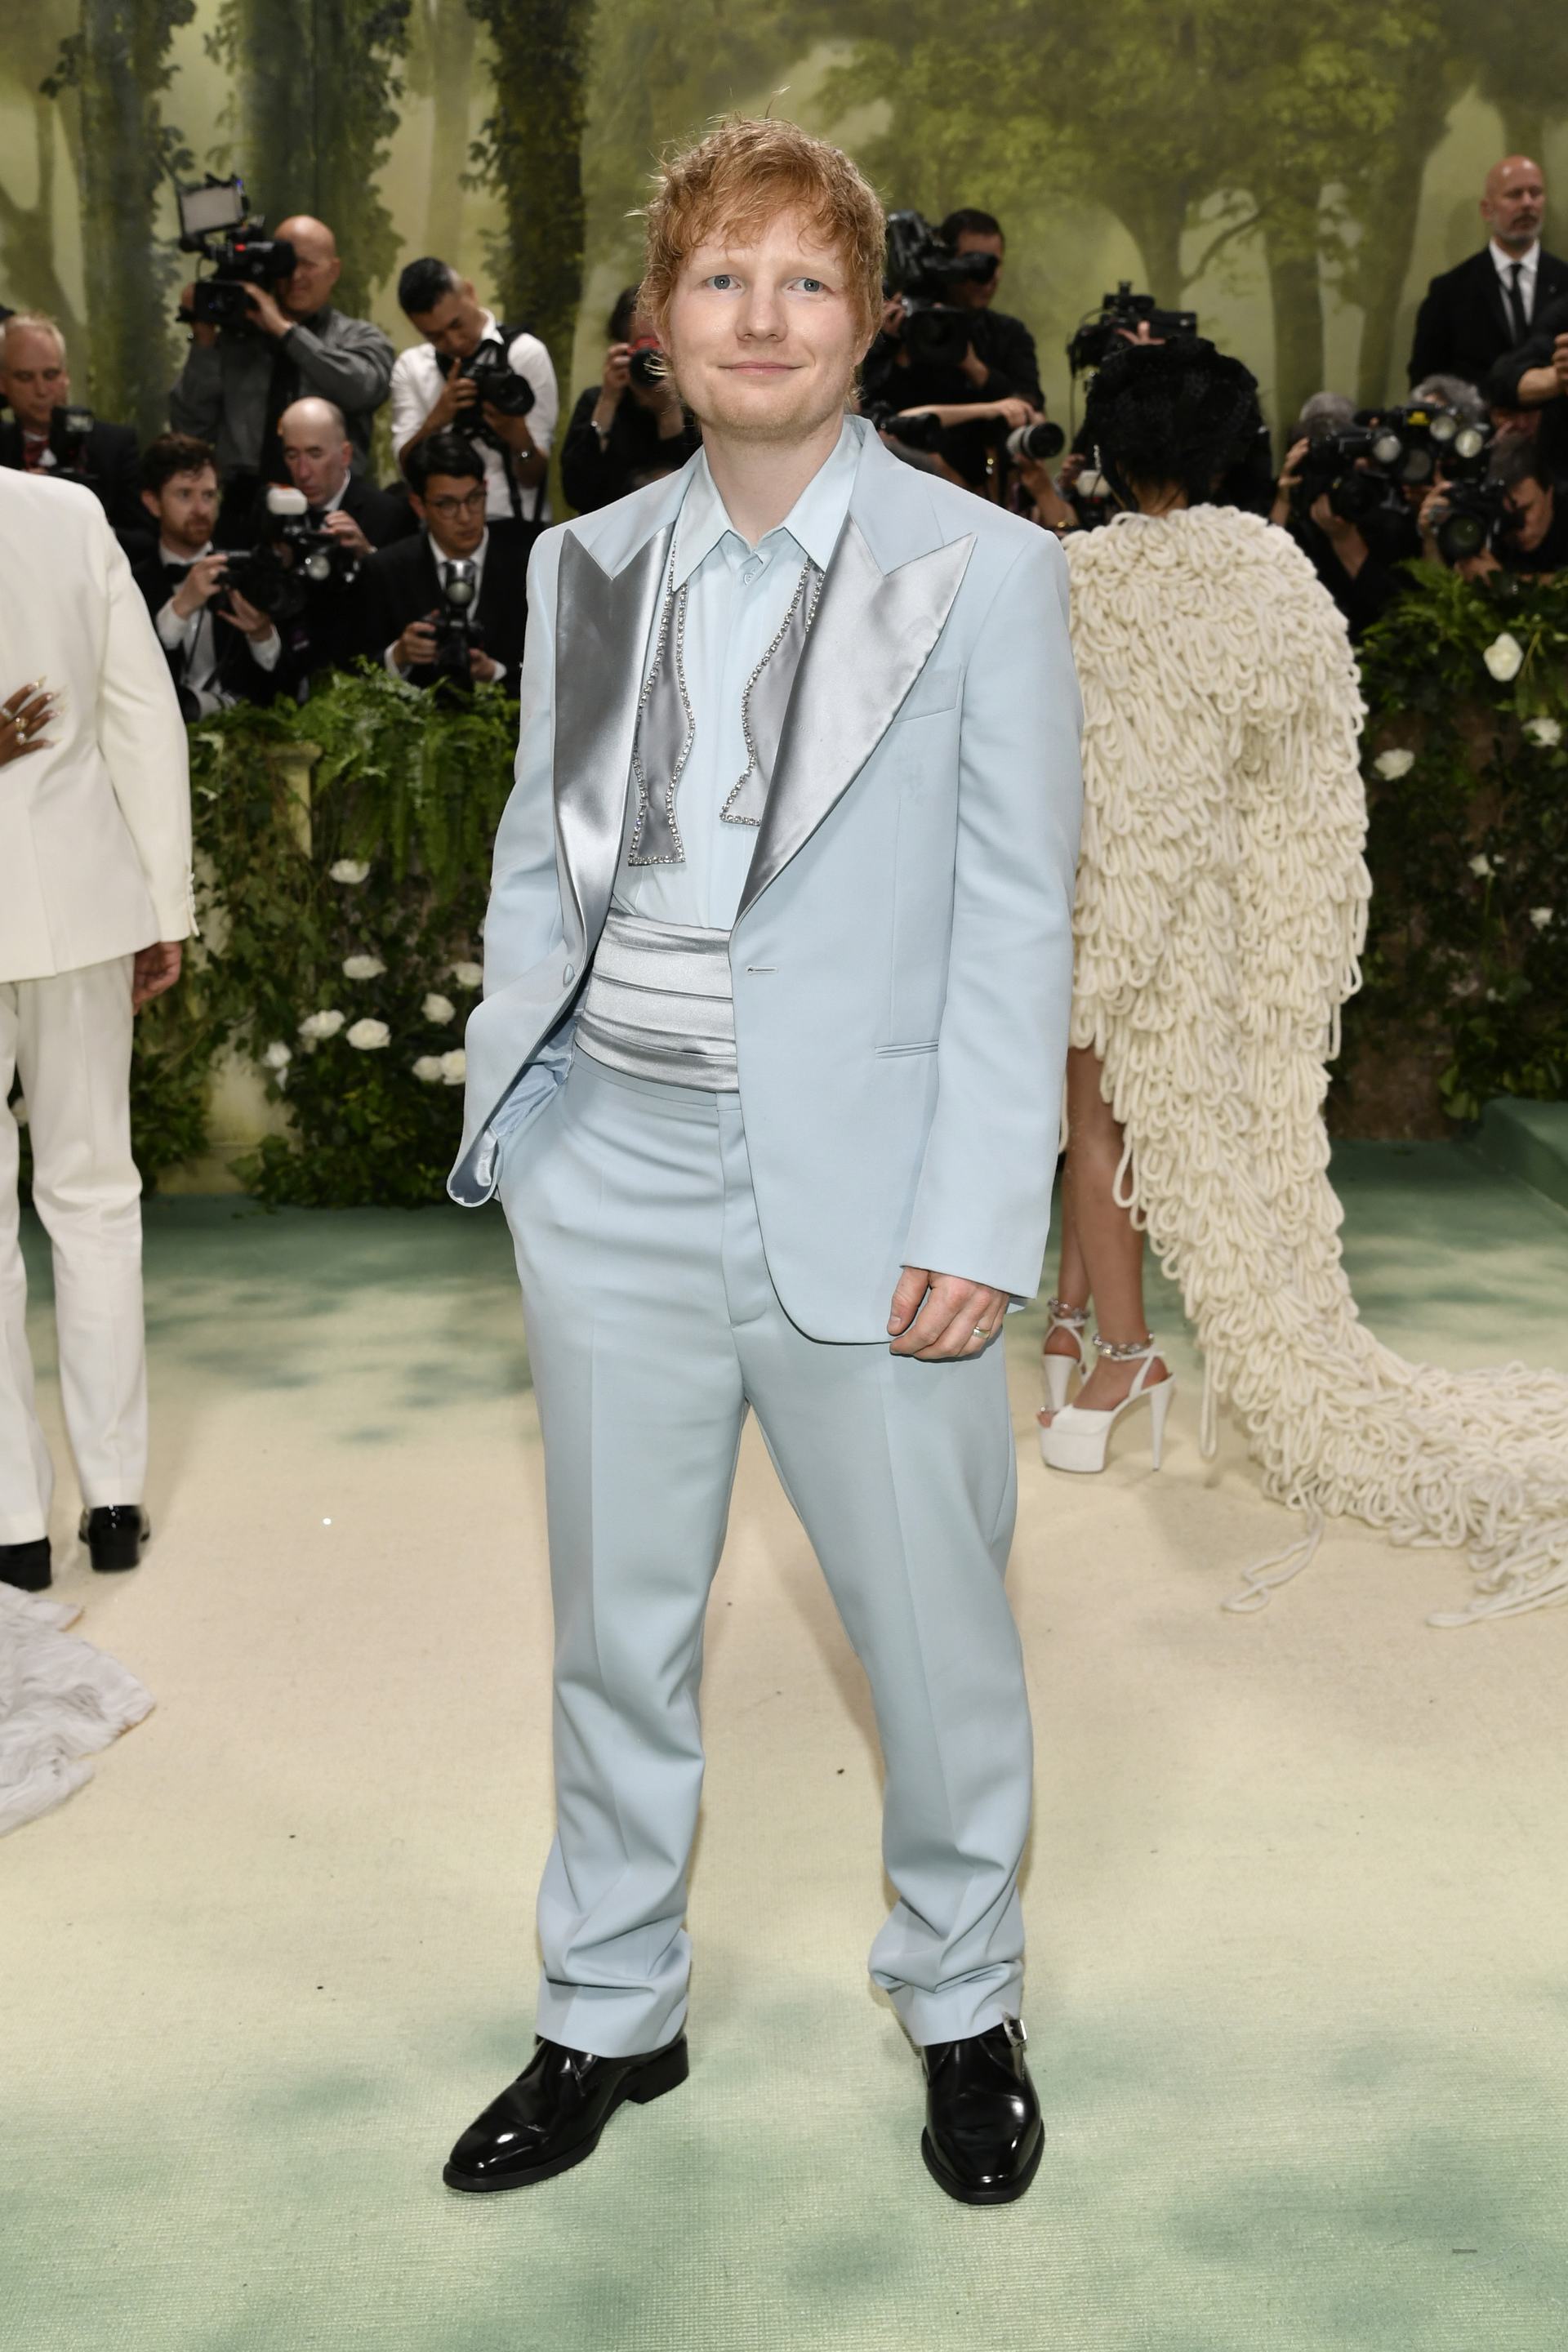 Ed Sheeran attends The Metropolitan Museum of Art’s Costume Institute benefit gala (Evan Agostini/Invision/AP).